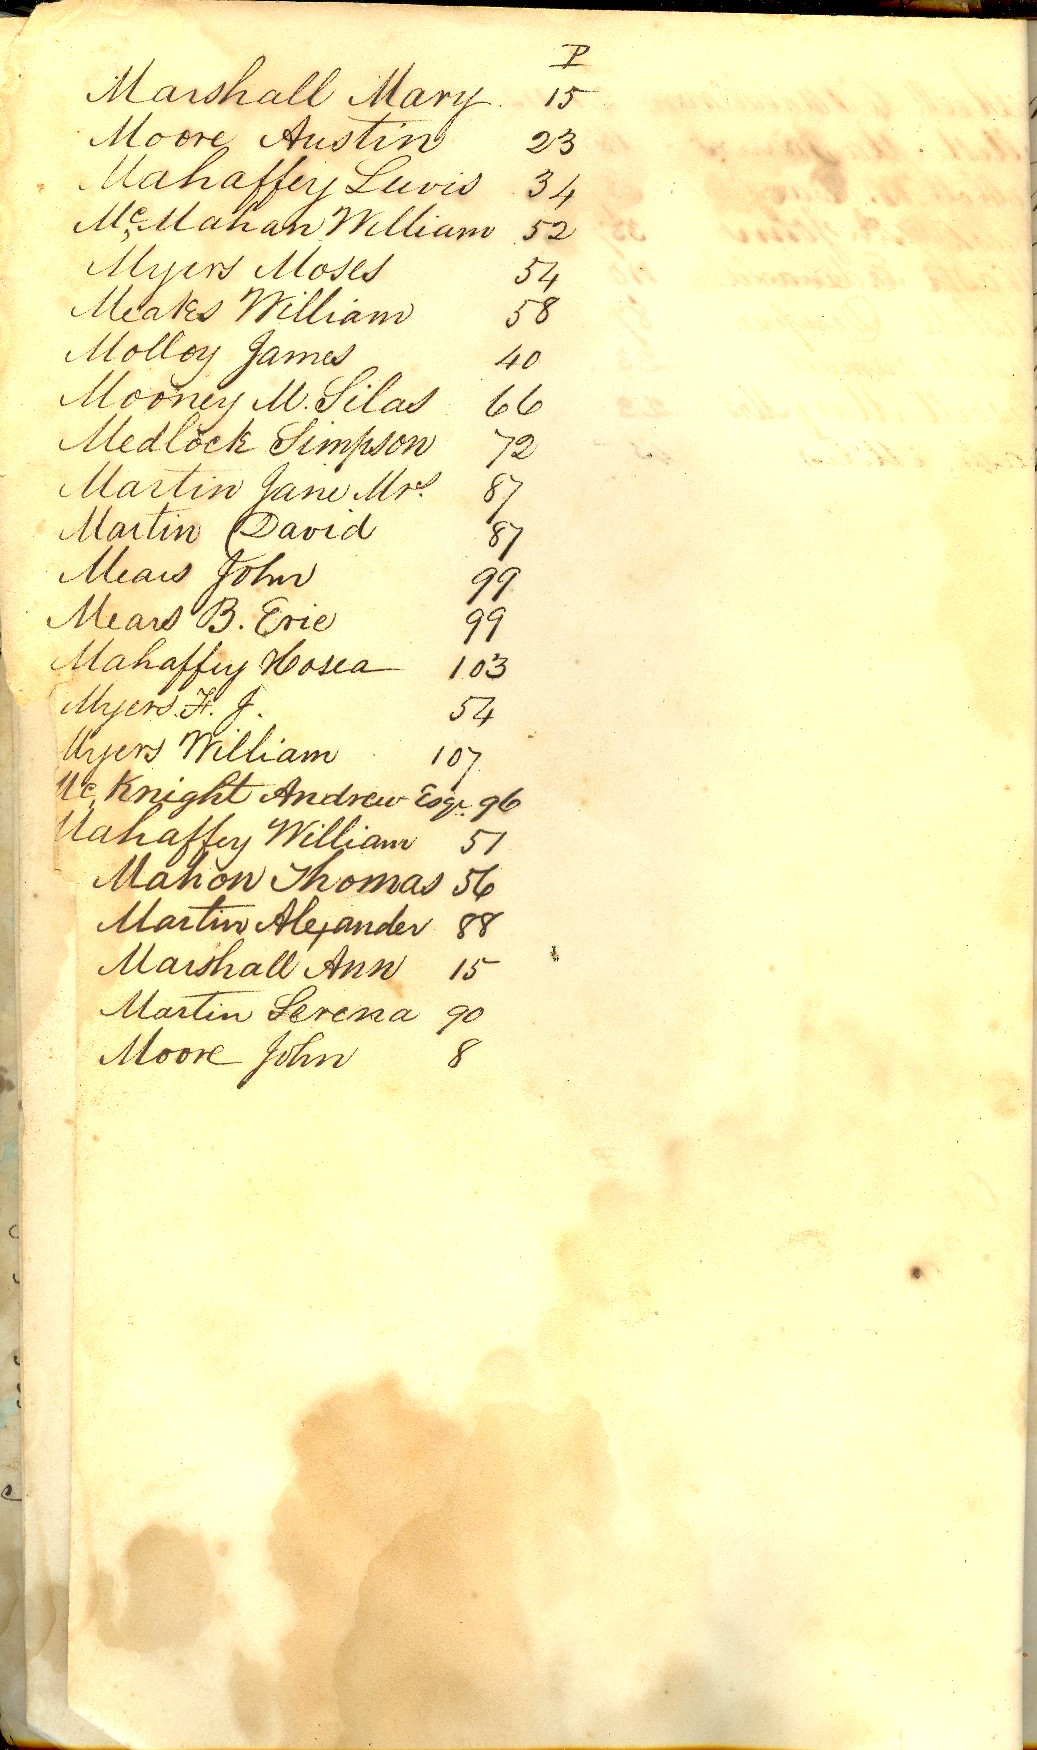 Bolling Store Ledger - 1844 Listing, p. 8